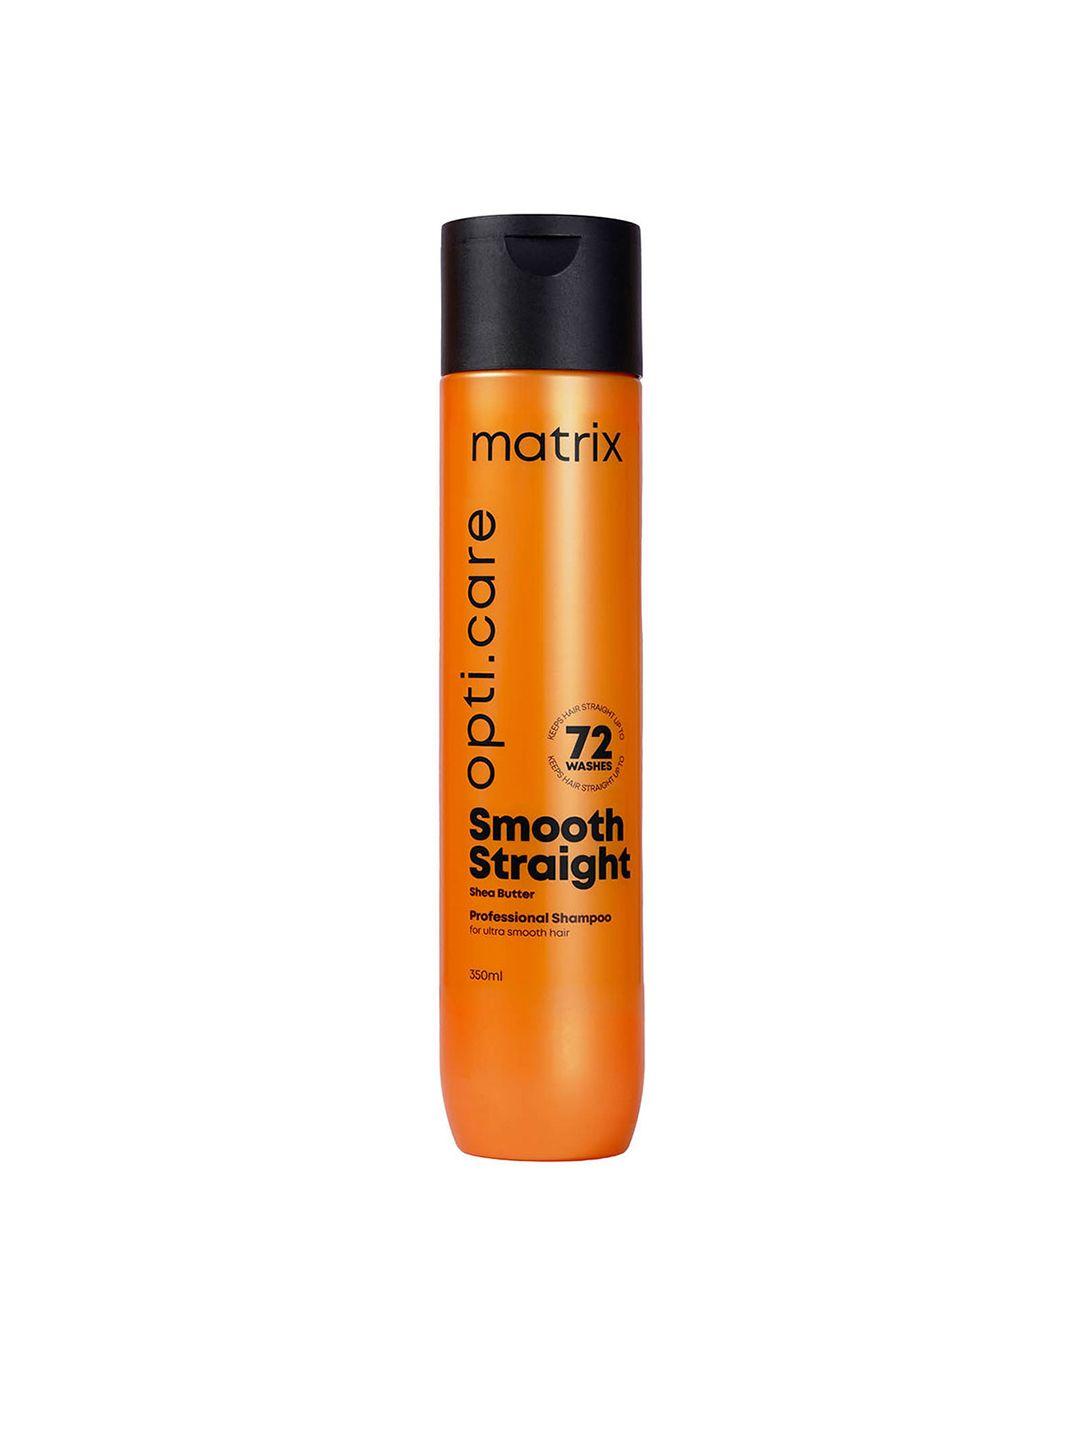 matrix-opti-care-smooth-straight-professional-shampoo-with-shea-butter-350ml